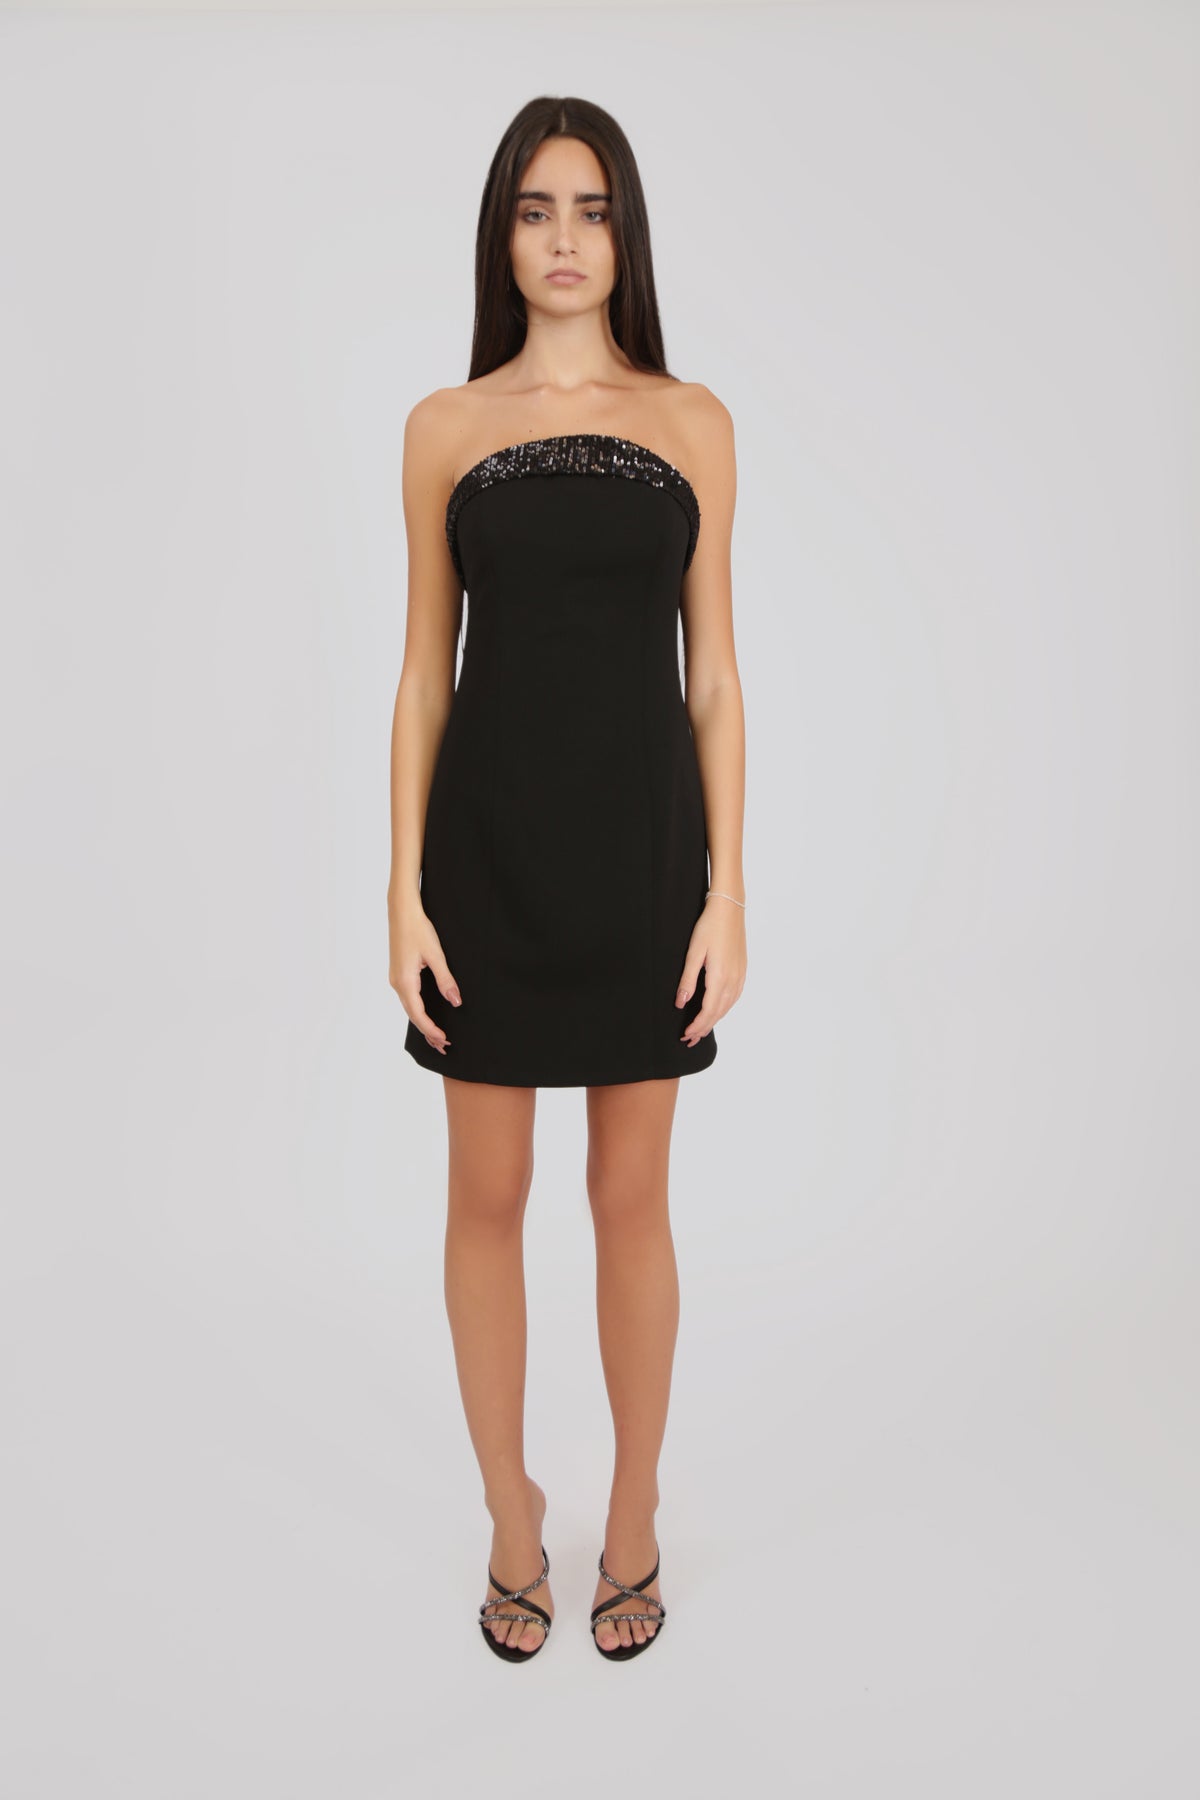 Black Sequined Mini Dress